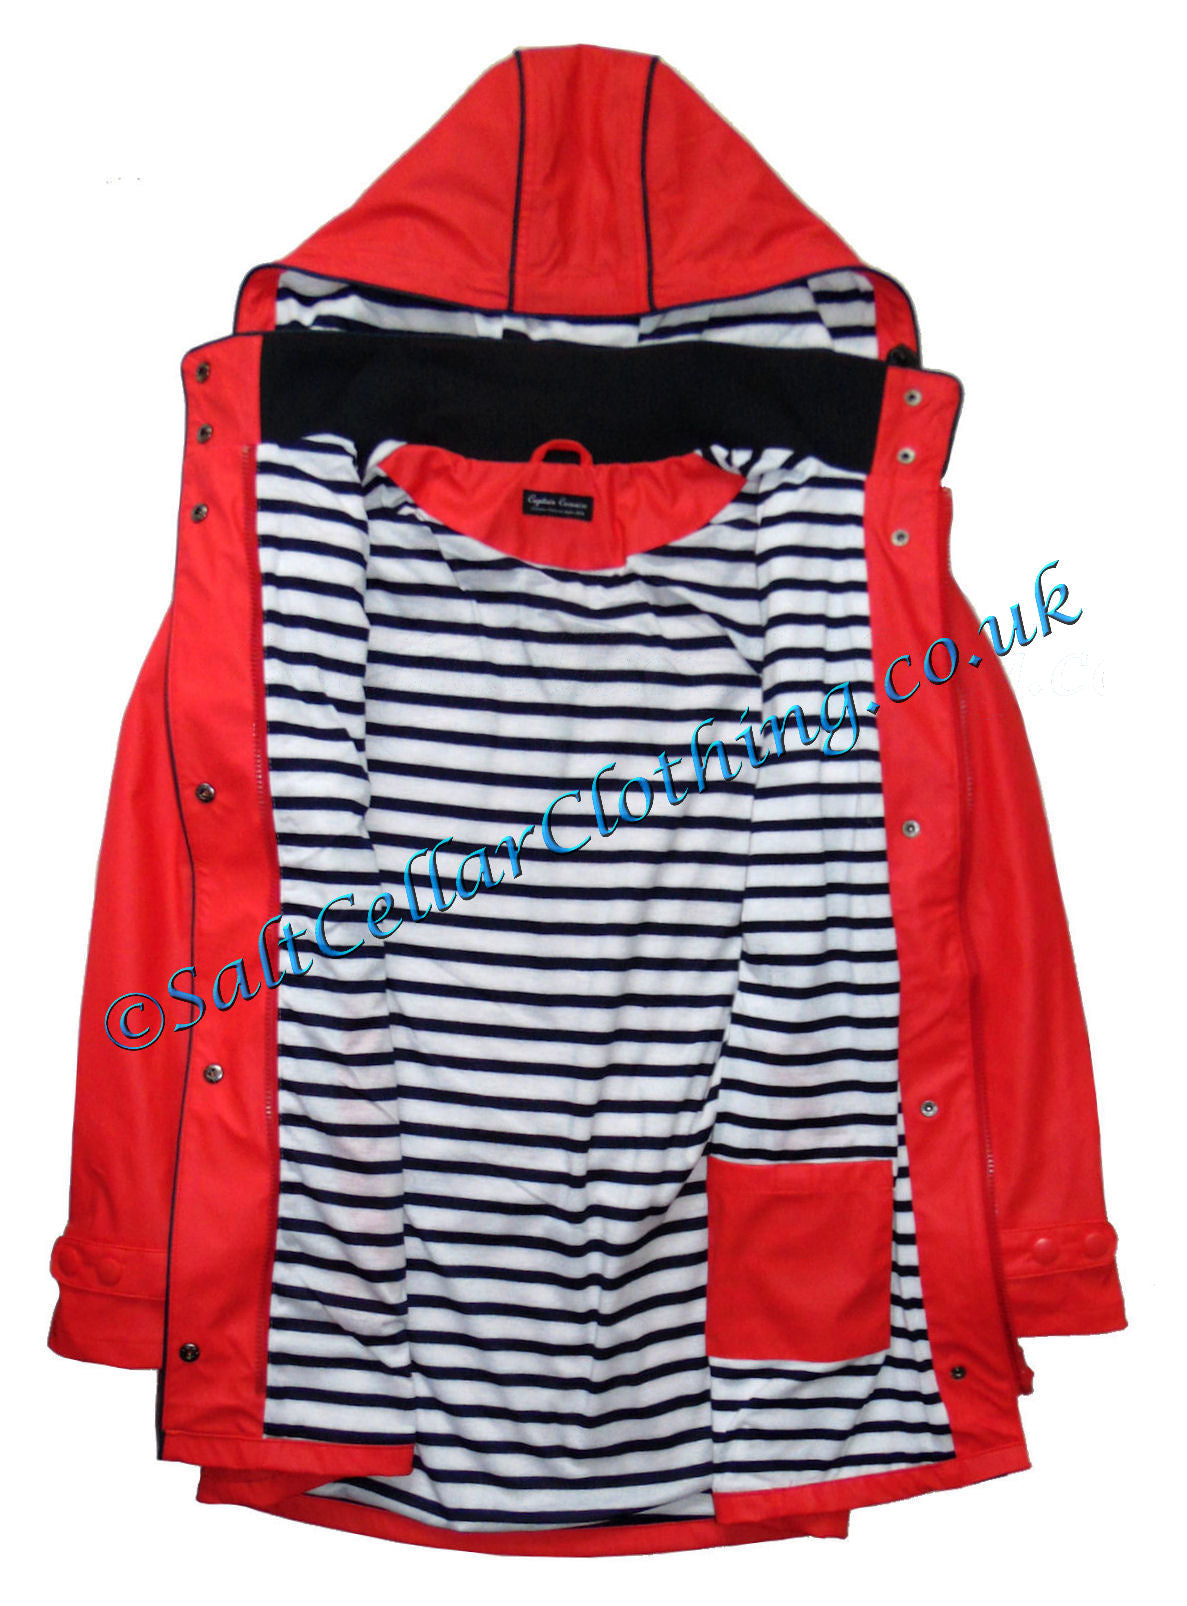 Women's Regate Ete stripy lined waterproof rain coat from Captain Corsaire in Capucine Red / Orange.